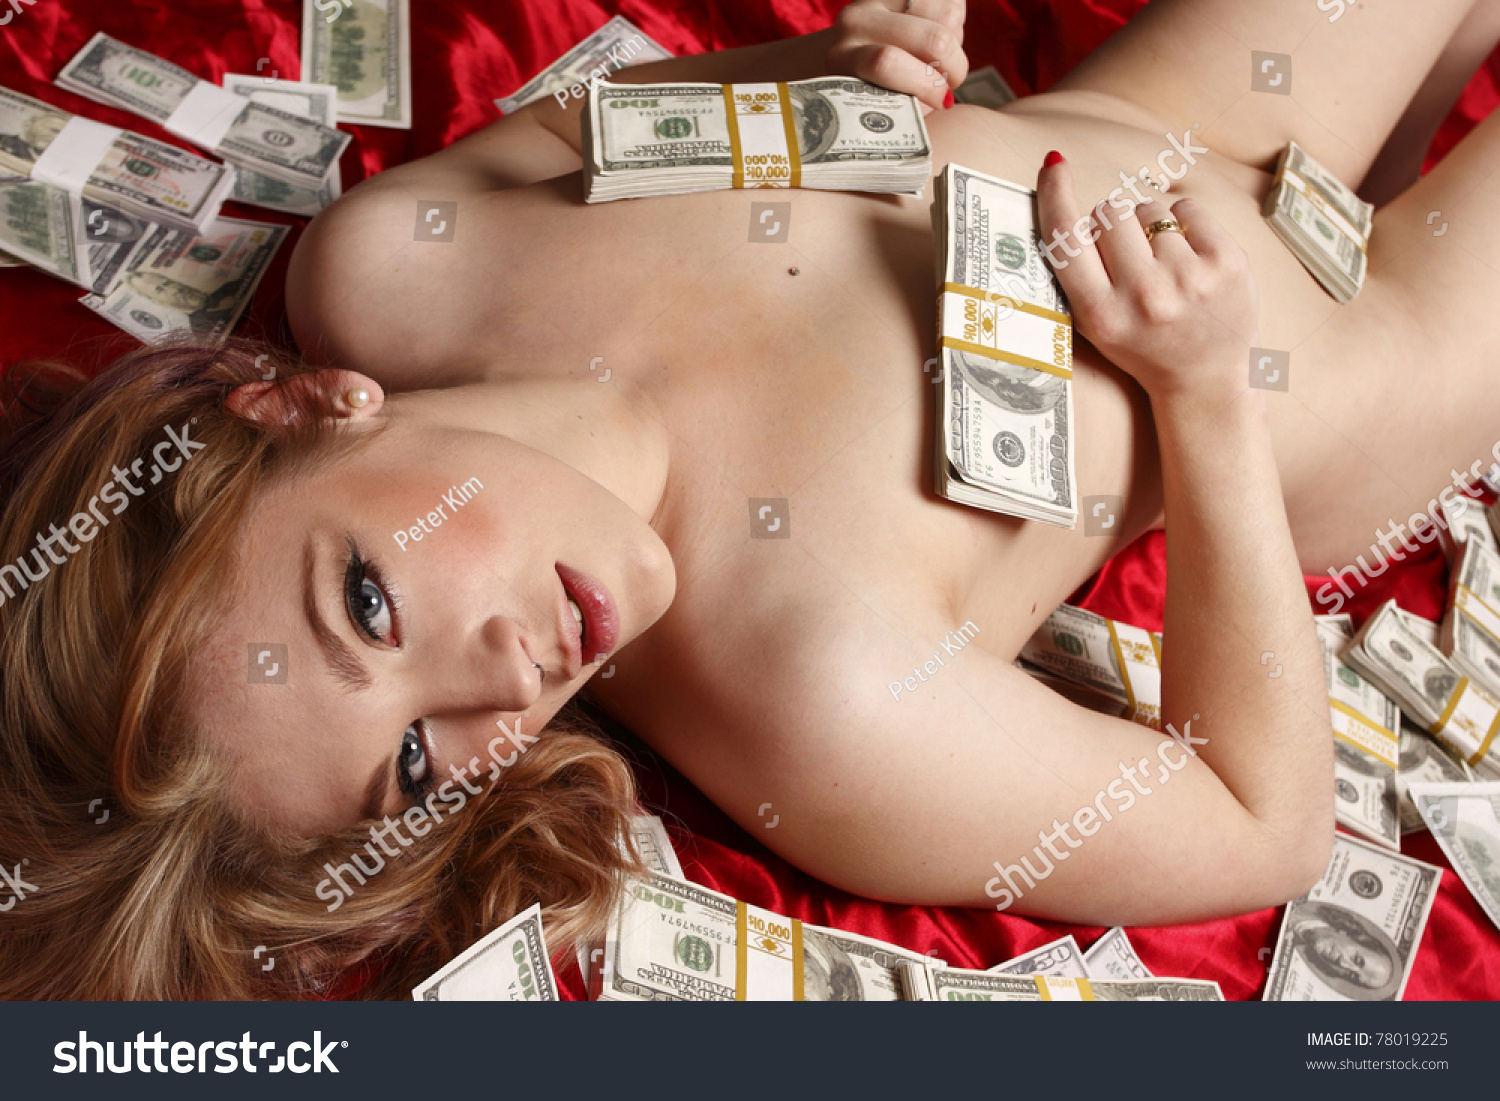 dipak chhetri add naked in money photo